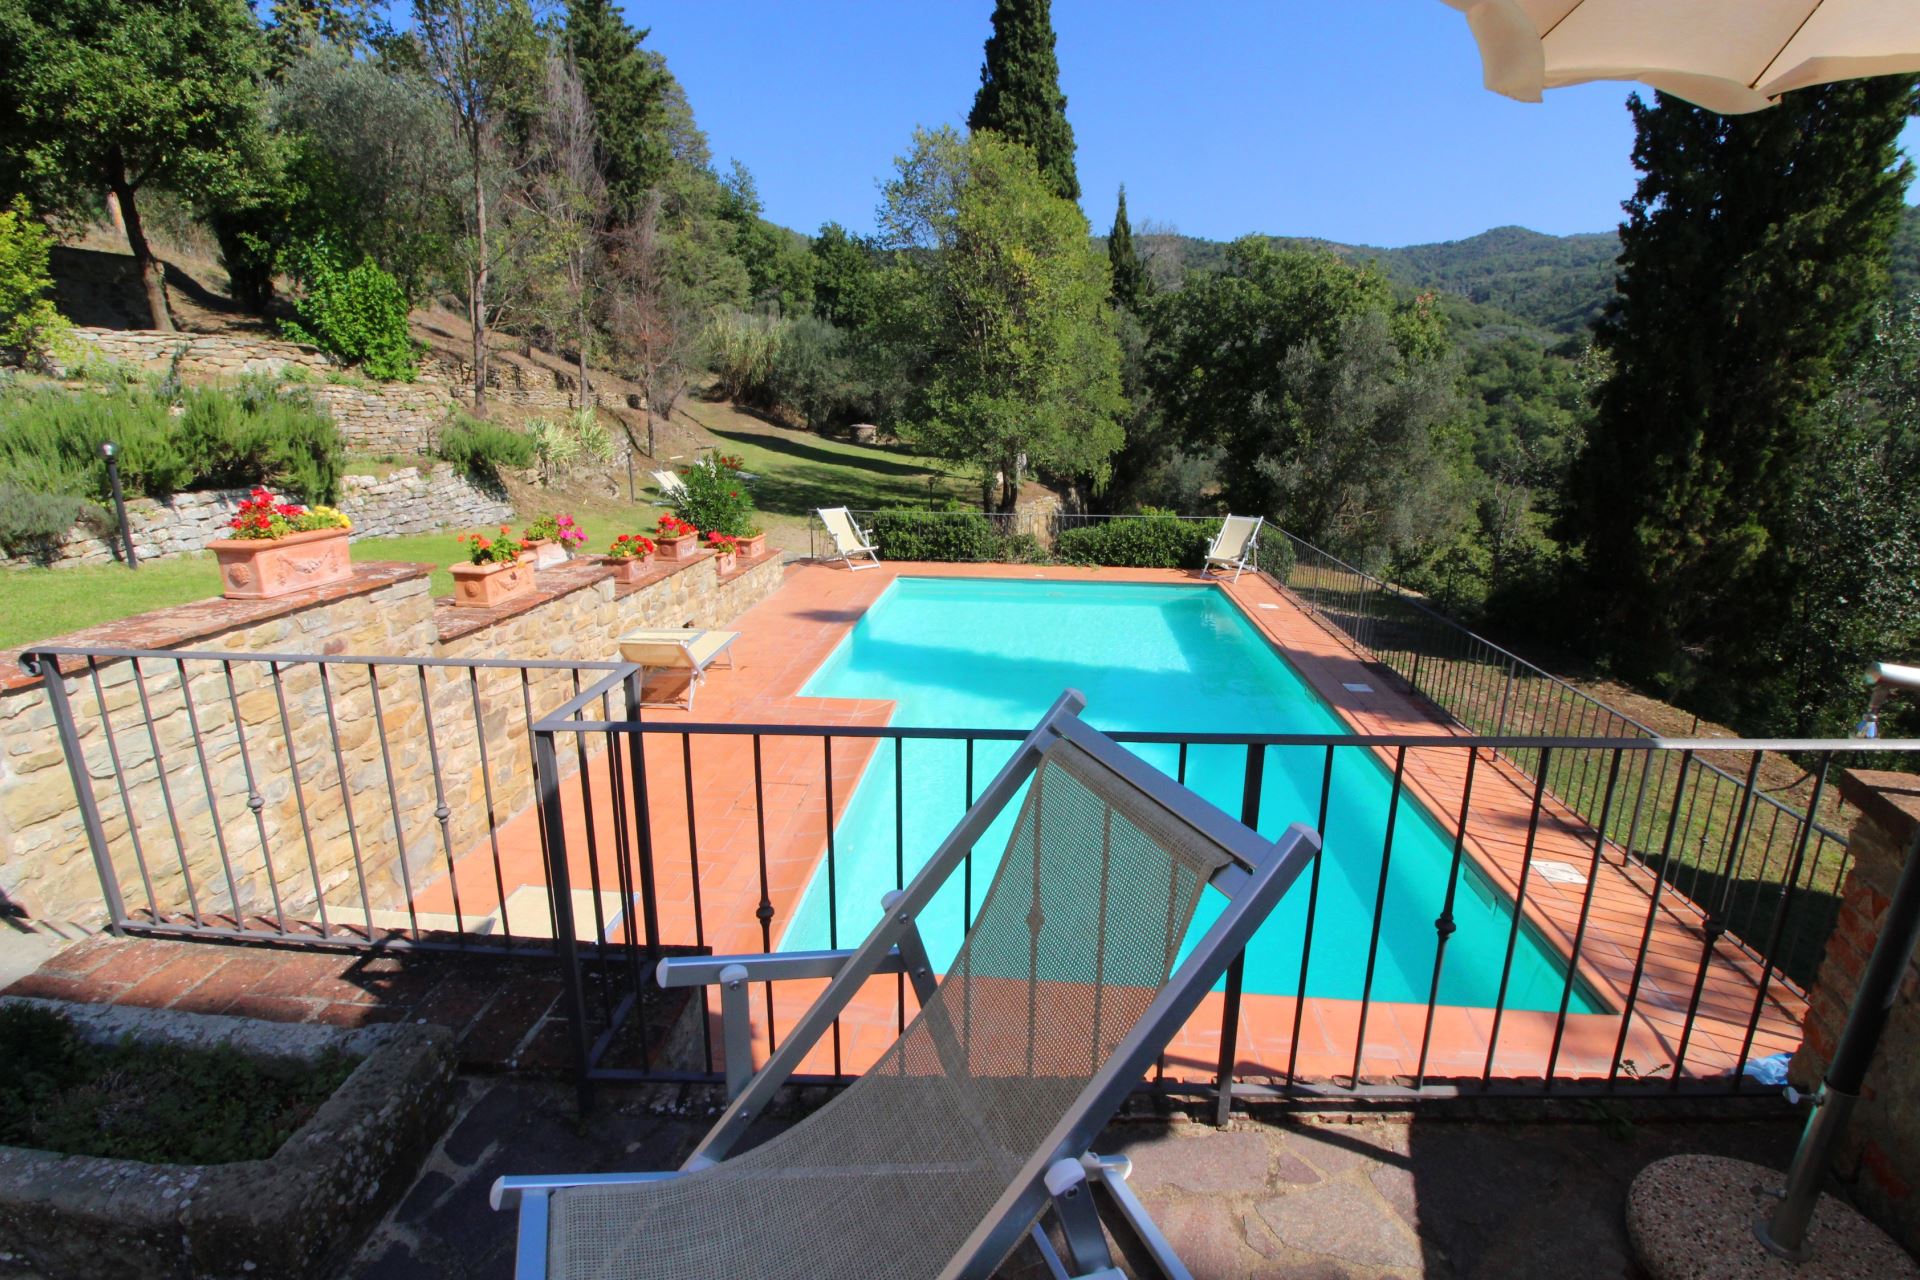 434_0c0e3d8_Kindvriendelijk vakantiehuis met privÃ© zwembad, Borgo Caprile, Toscane, Cortona, Arezzo, (38).